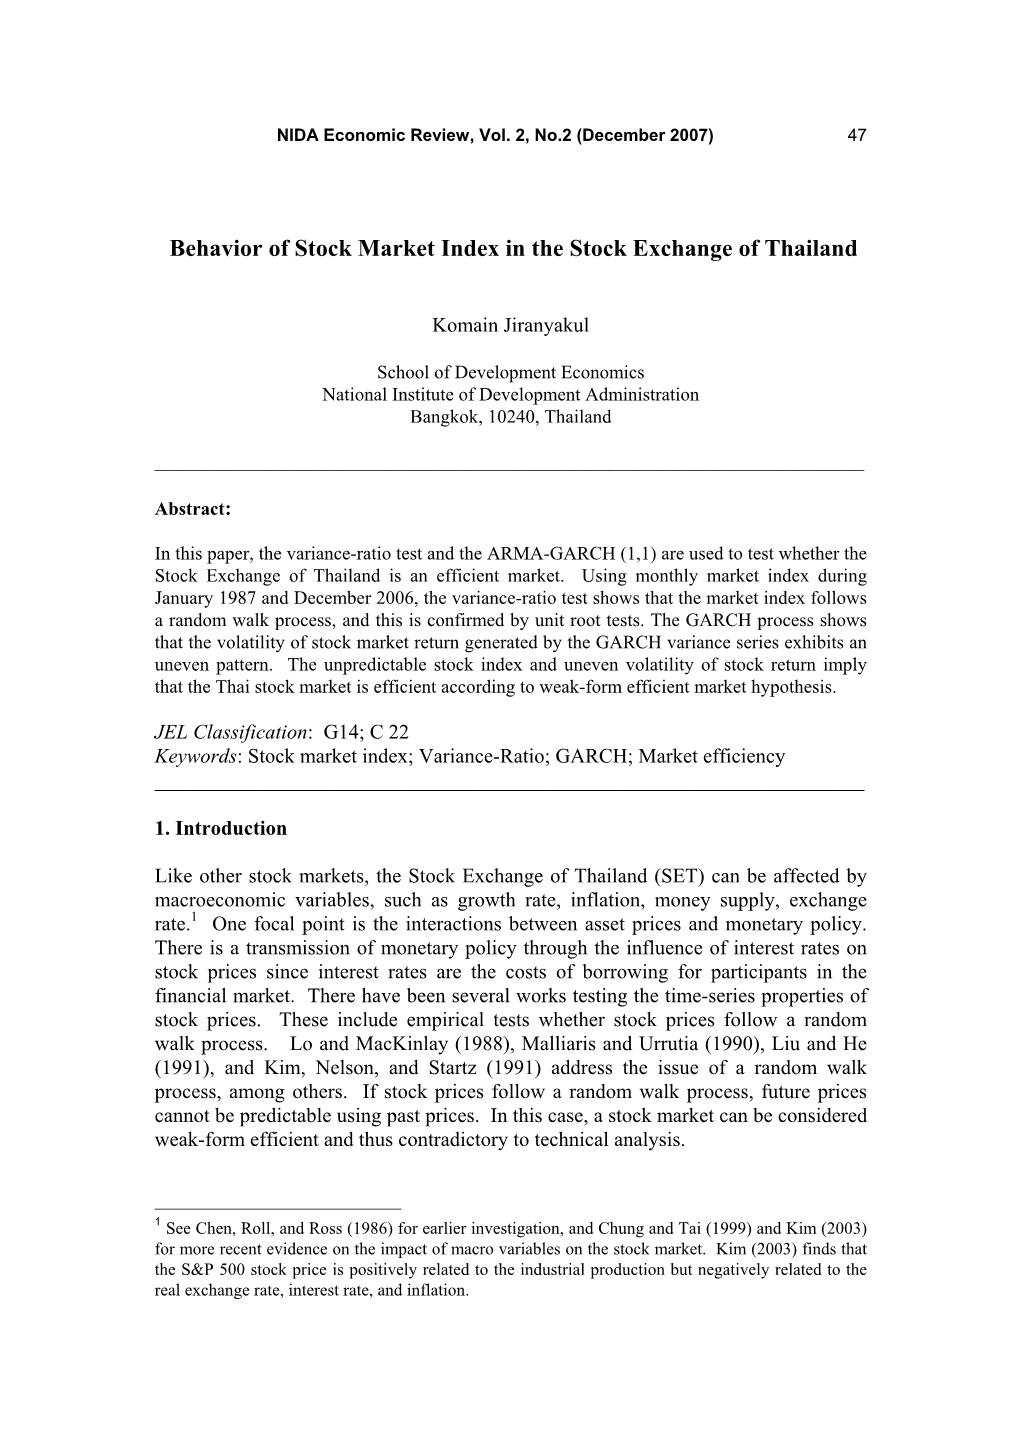 Behavior of Stock Market Index in the Stock Exchange of Thailand